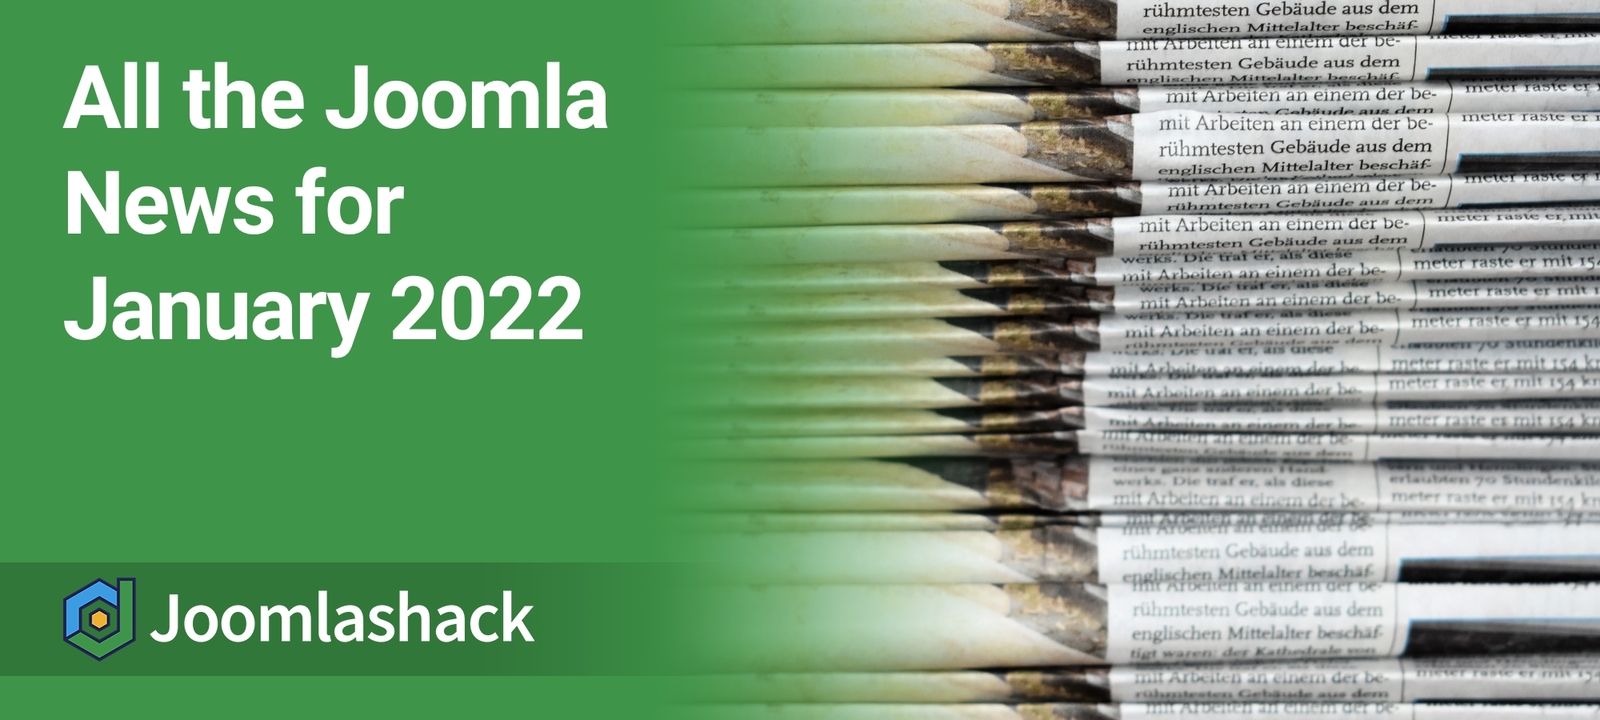 All the Joomla News for January 2022